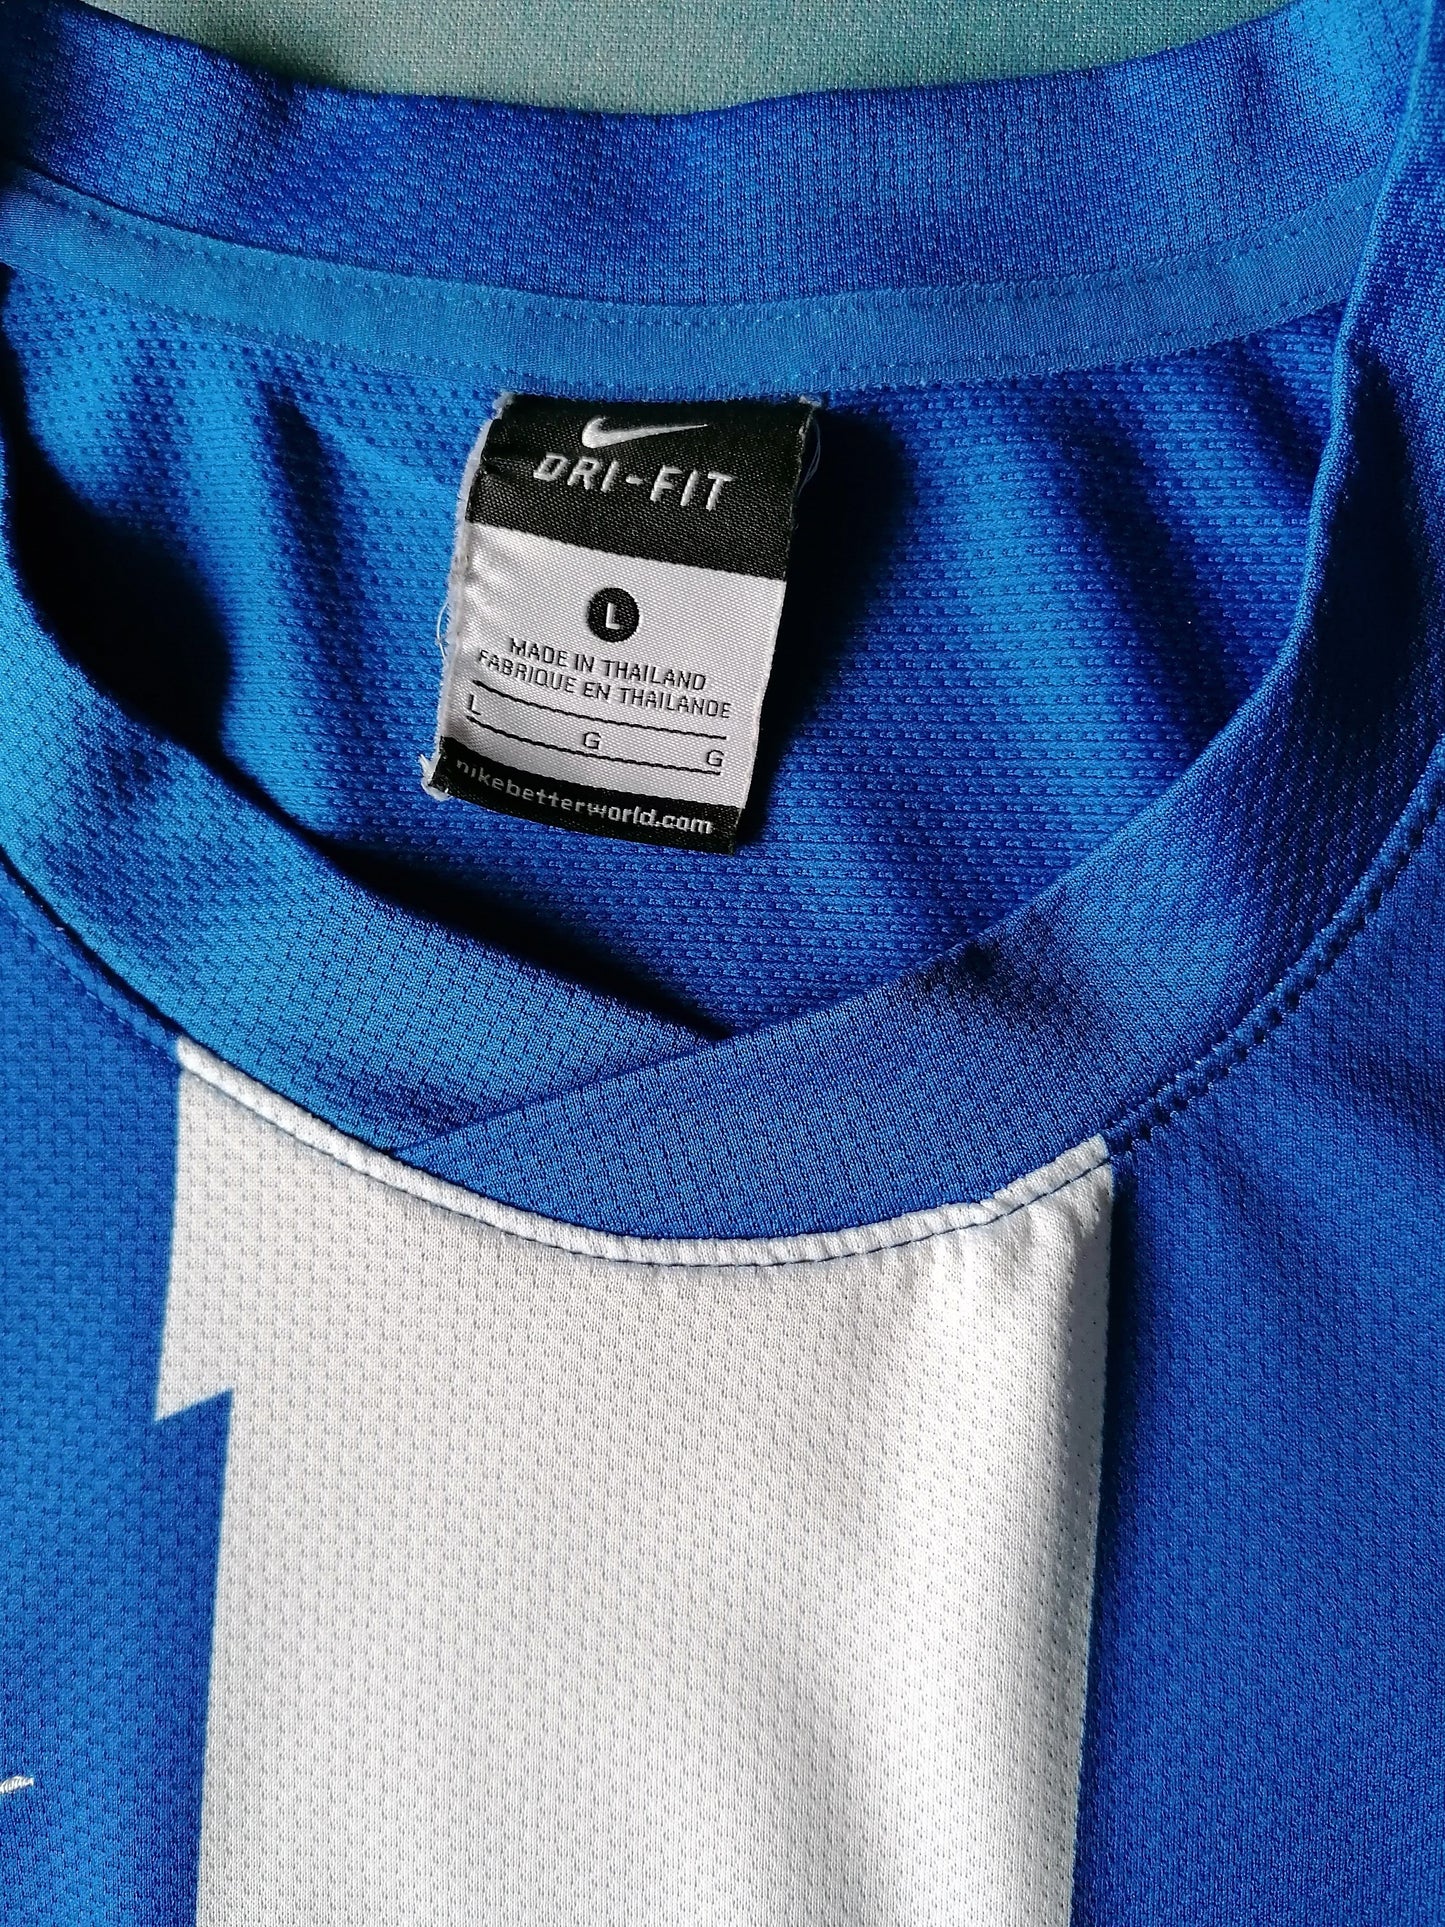 Camisa deportiva de Nike Soccer "Oroz". Motivo blanco azul. Talla L.